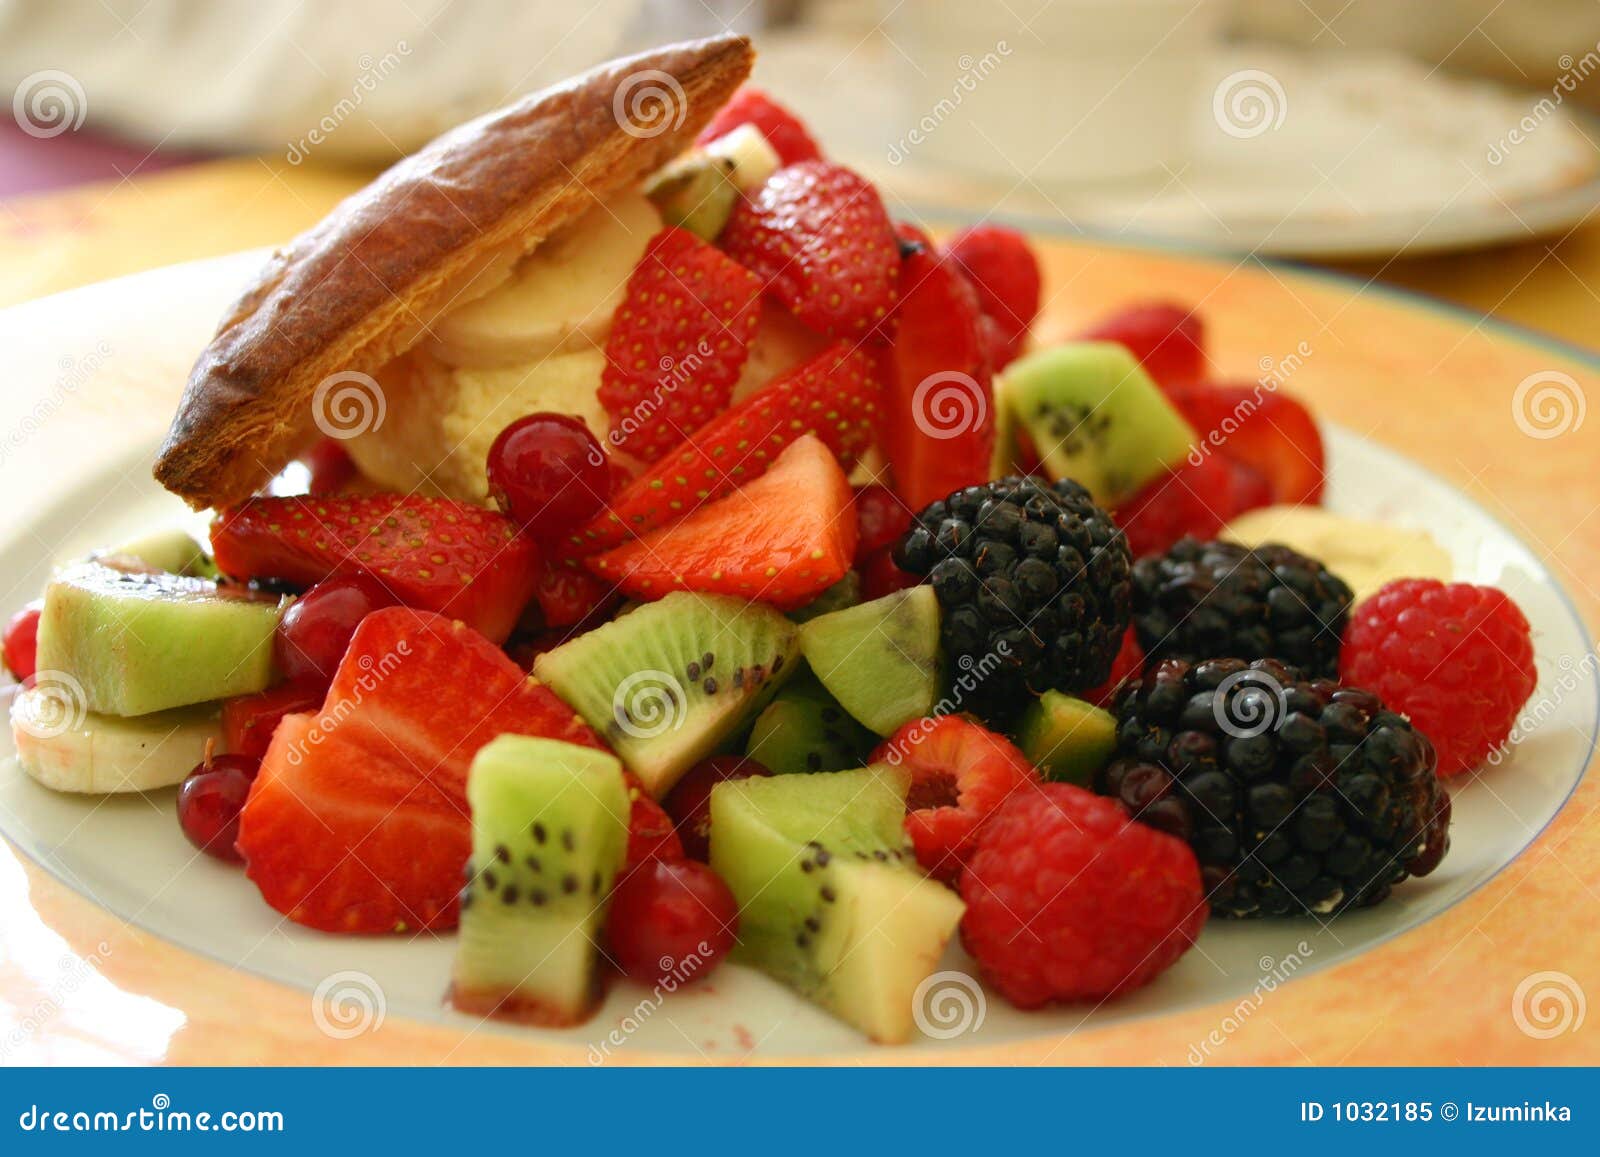 fruits salad on a plate